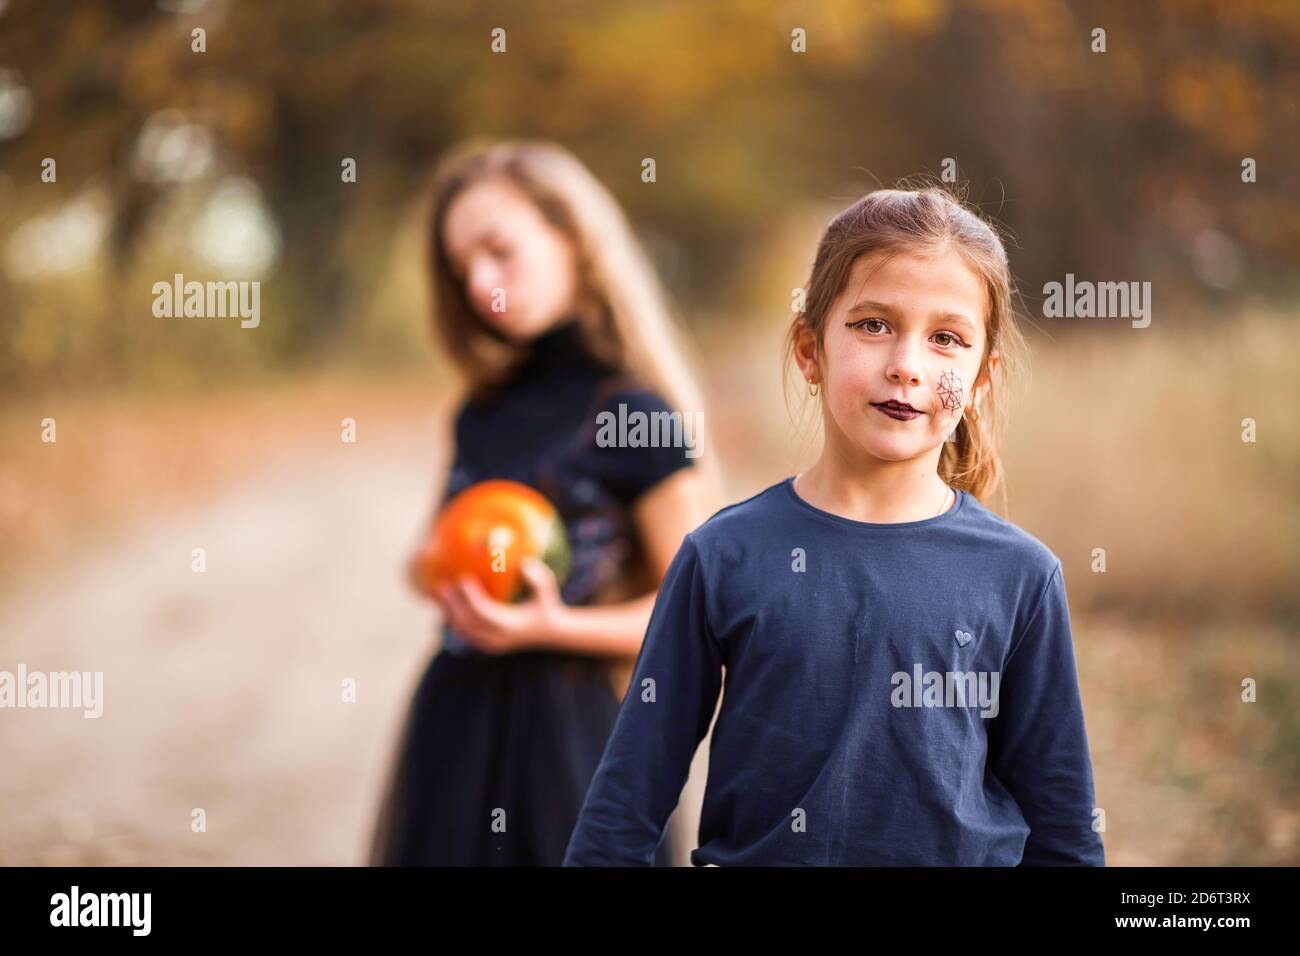 Two teenage girls prepare orange pumpkins for Halloween. Stock Photo